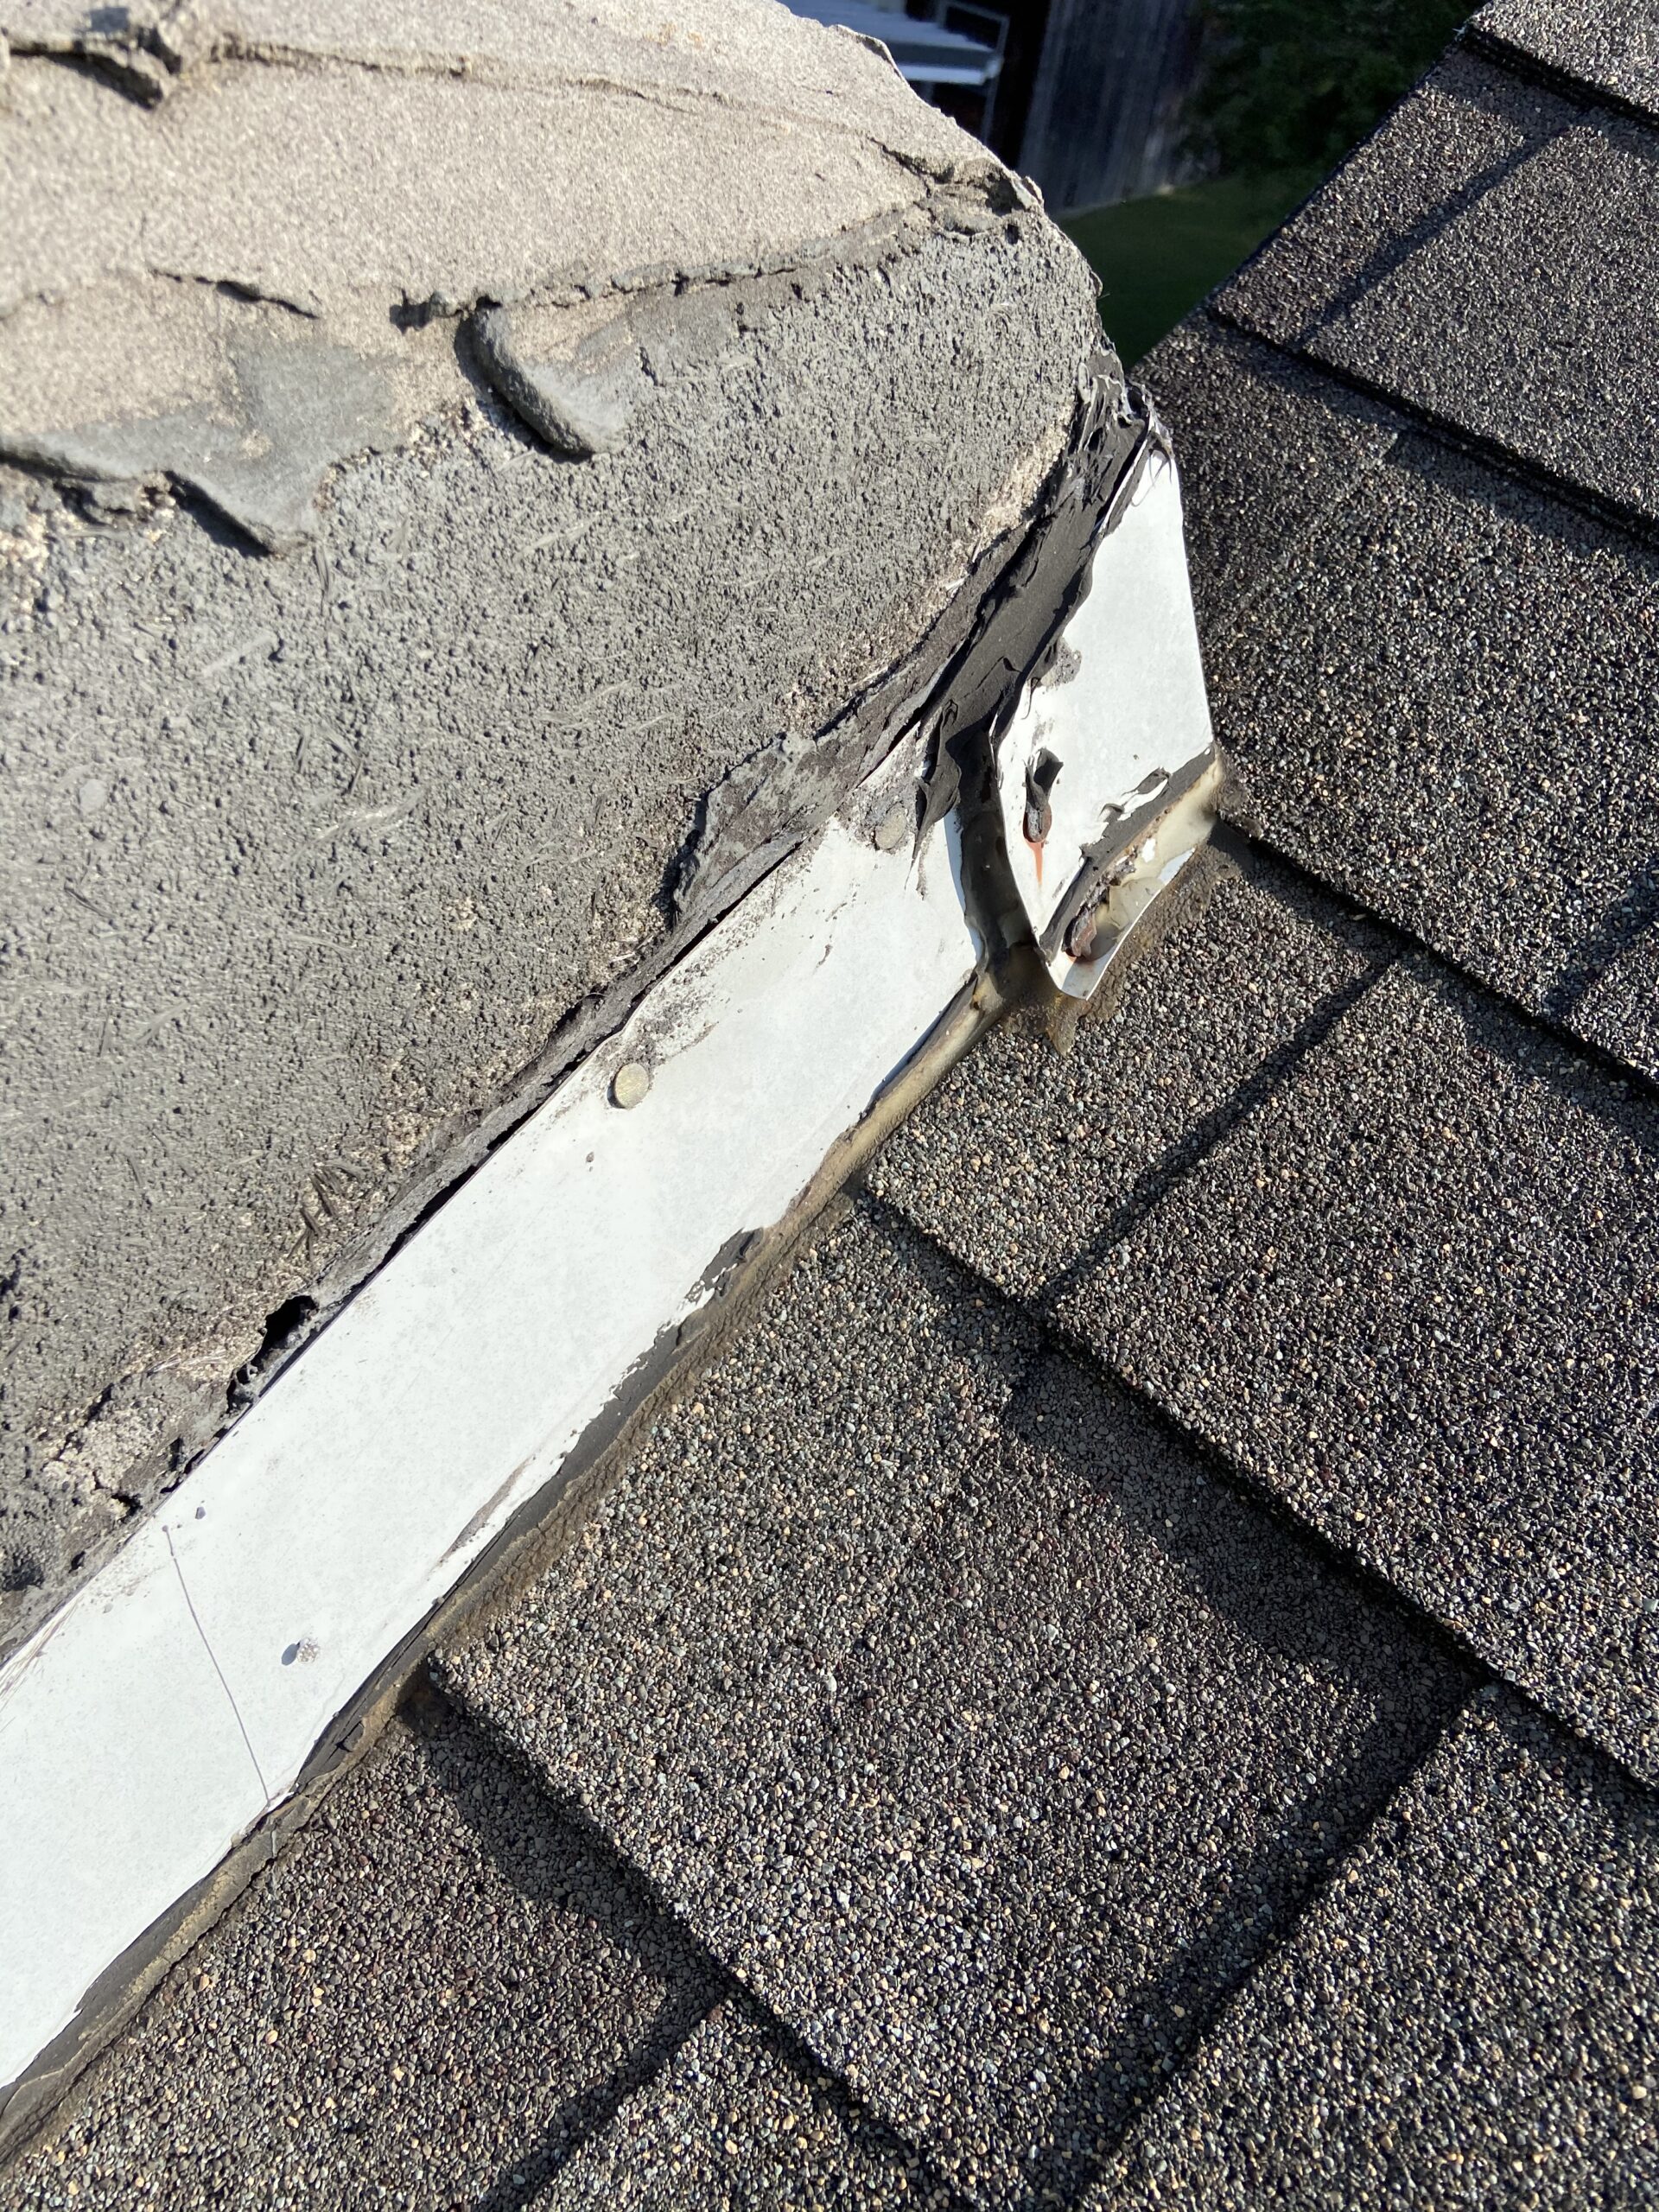 Leaking Chimney Roof Repair in Knoxville TN